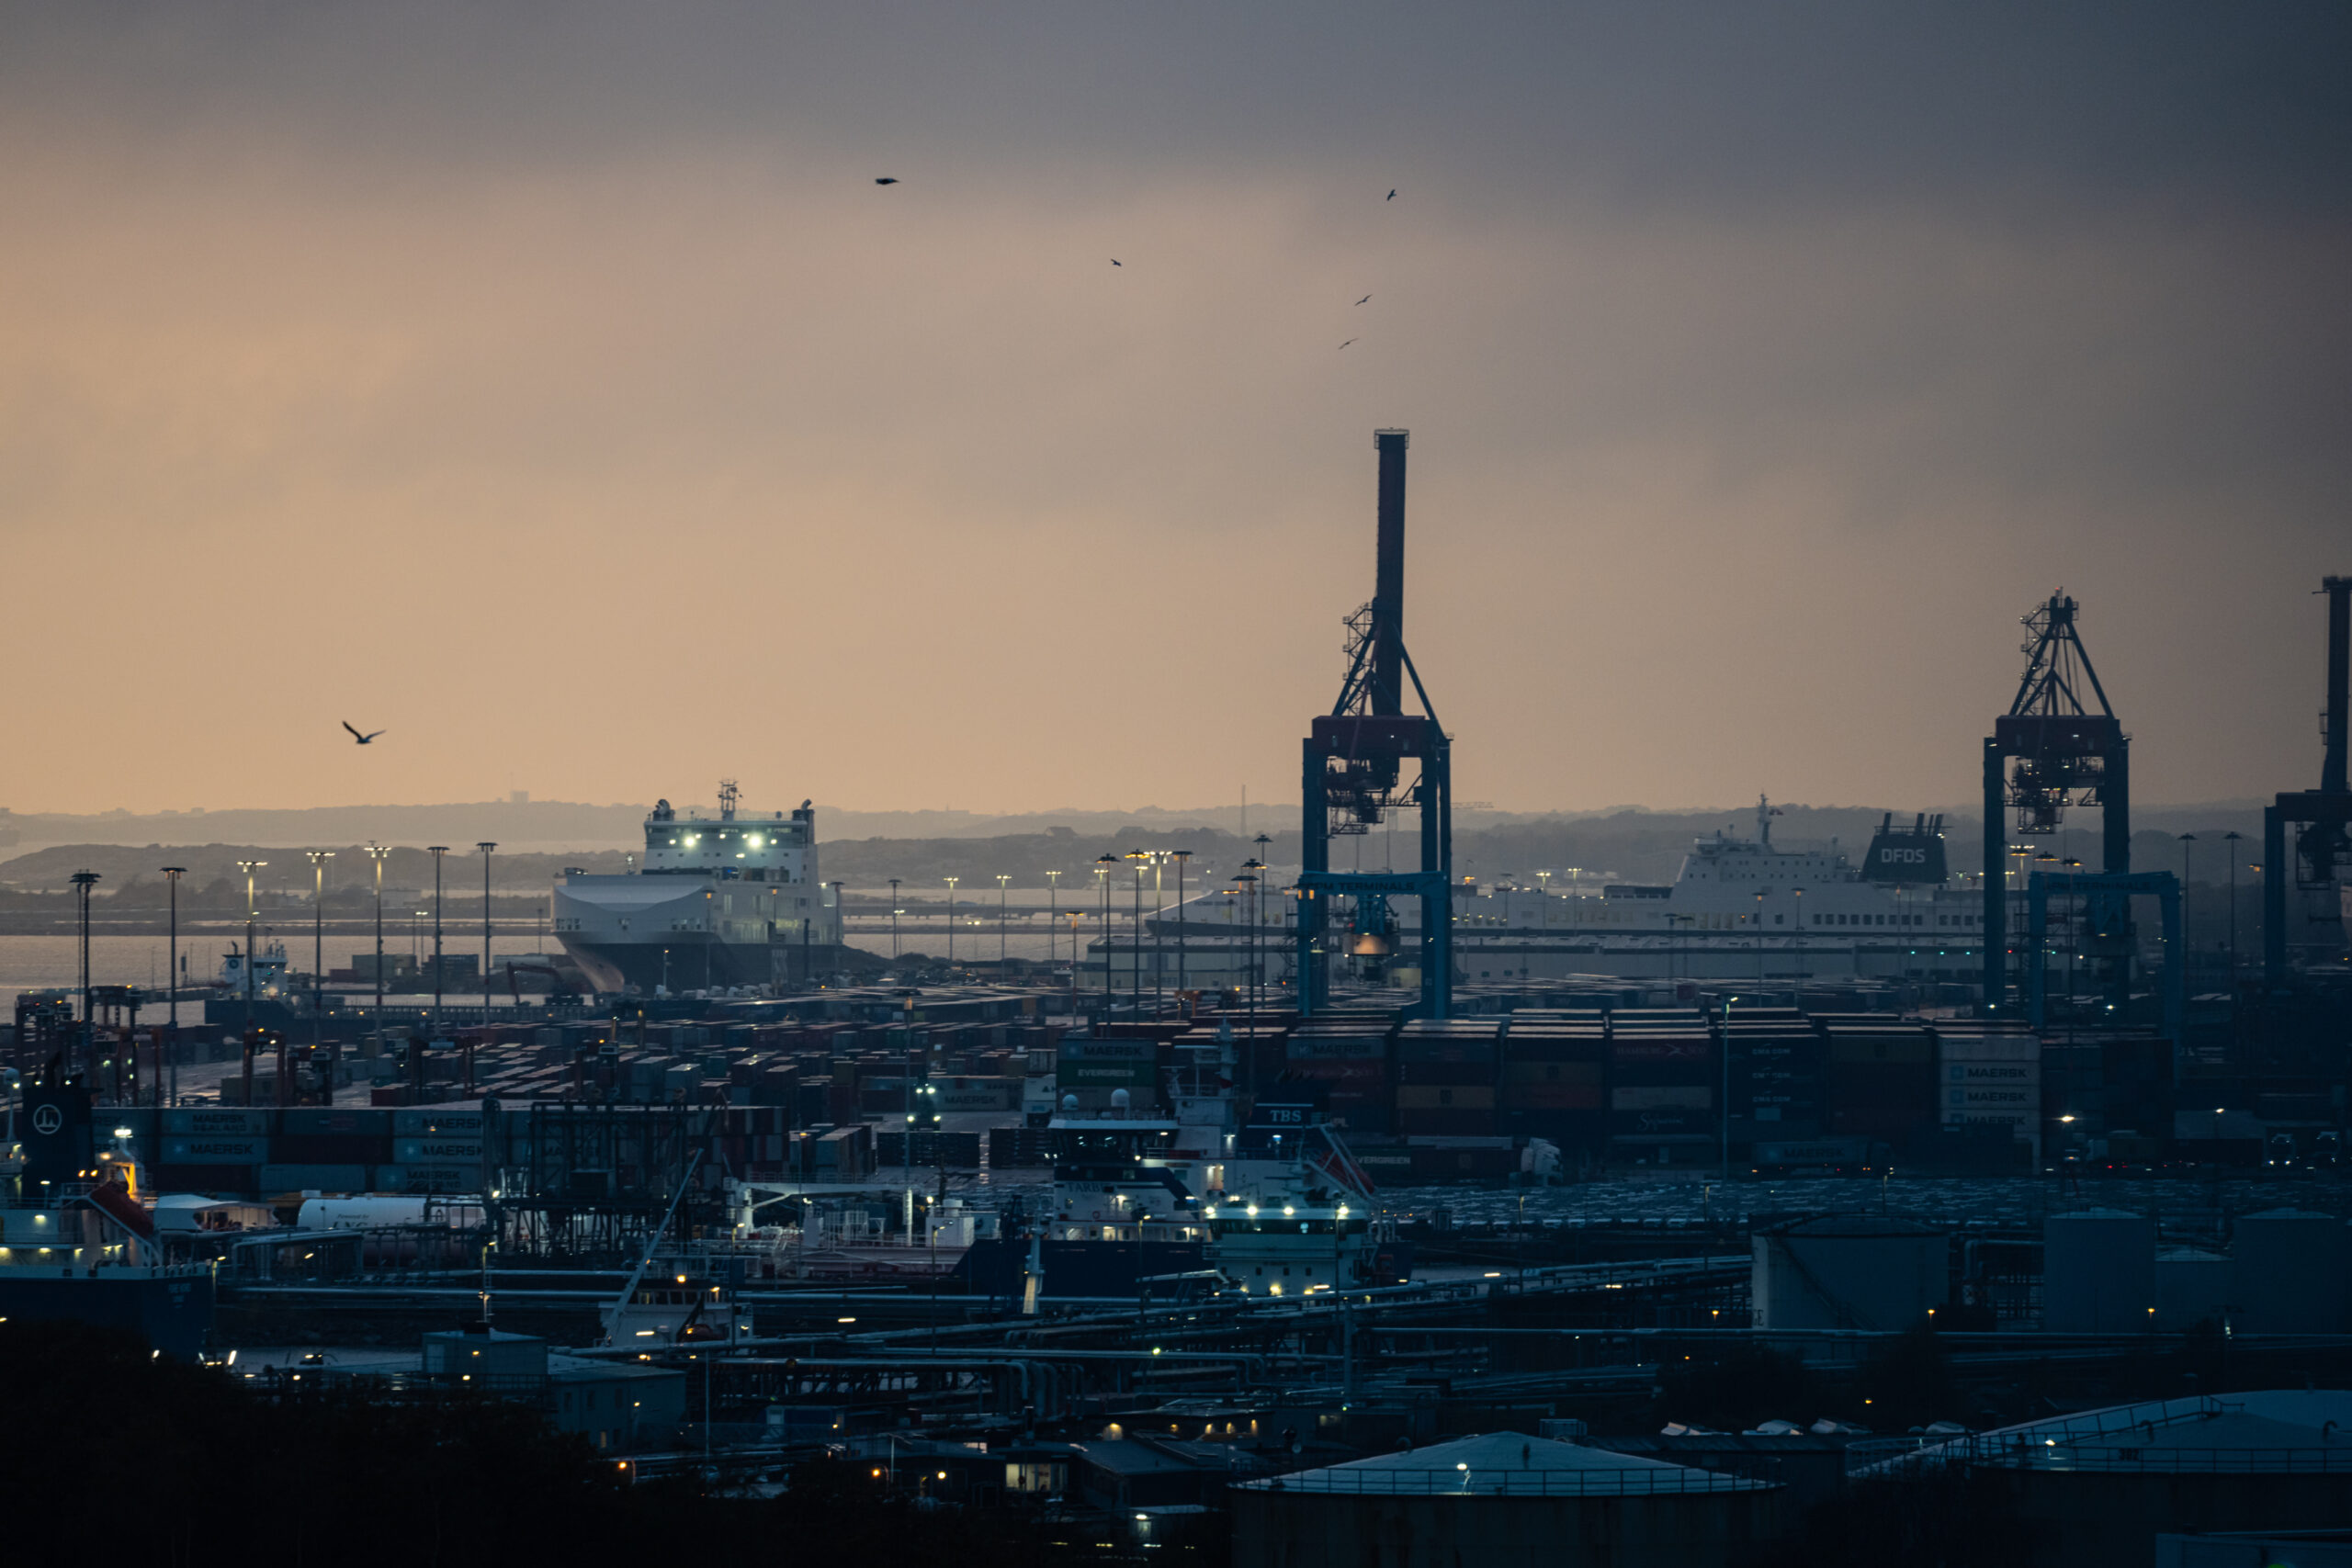 Evening photo of port of Gothenburg.